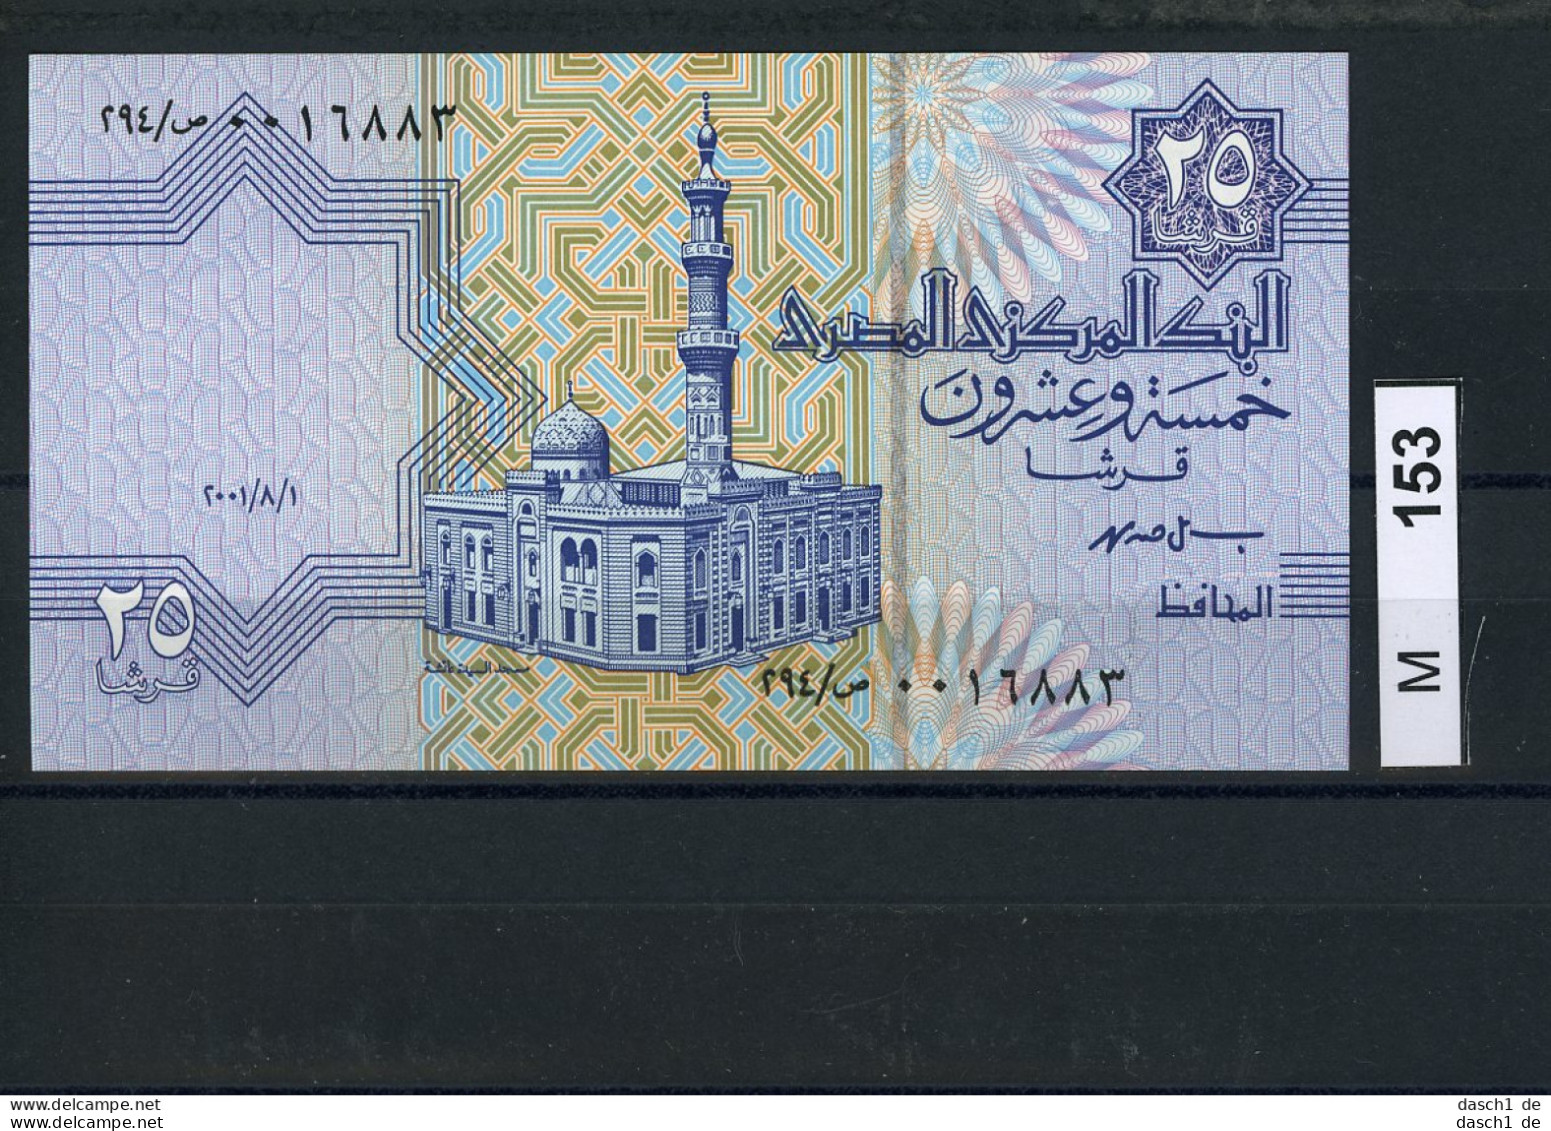 M153, Ägypten, Banknote Bankfrisch, 25 Piaster,  2001 - Egipto